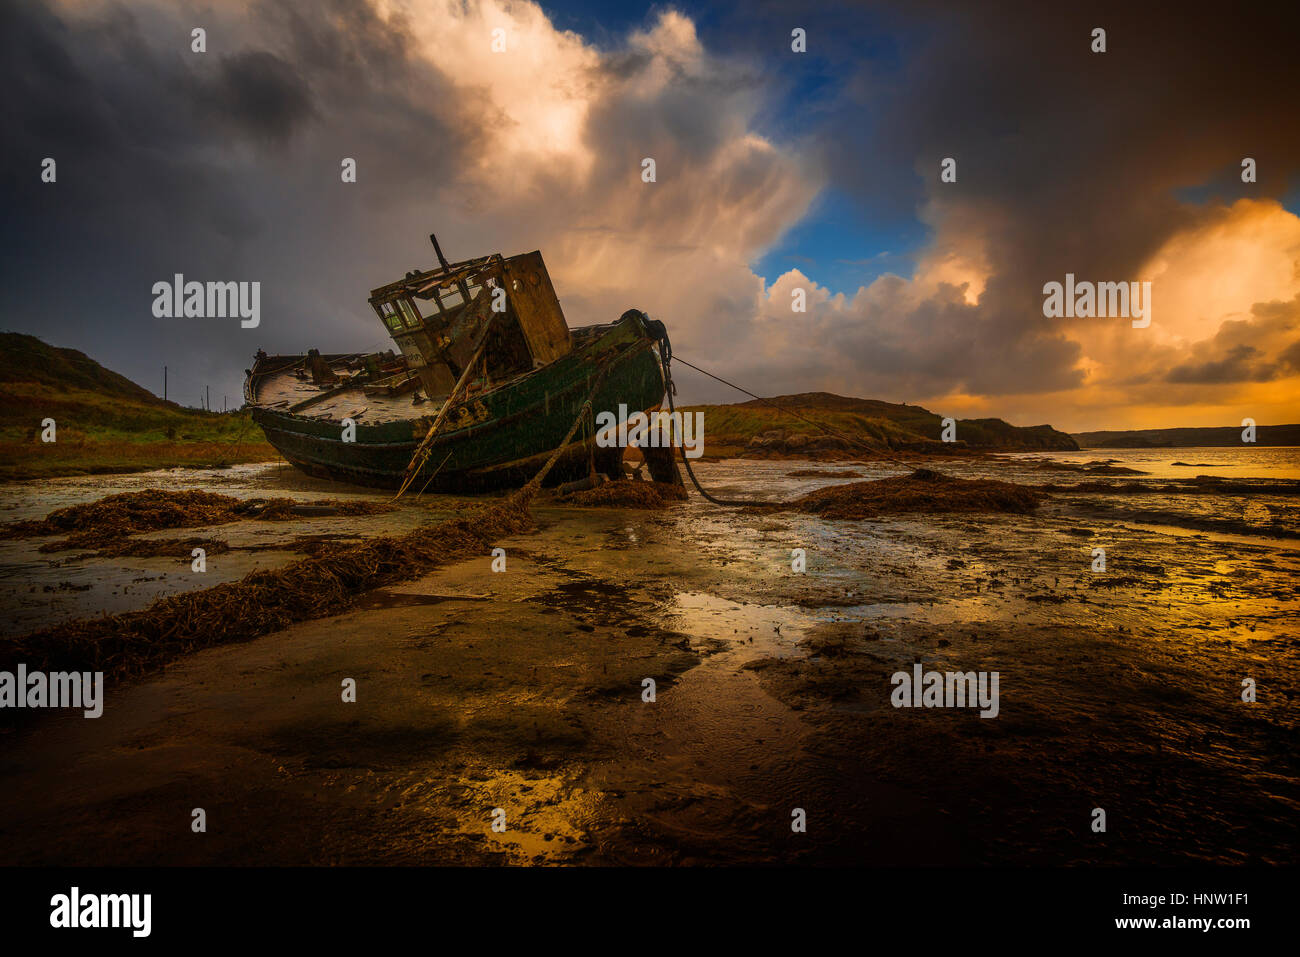 Shipwreck on beach at sunset Stock Photo